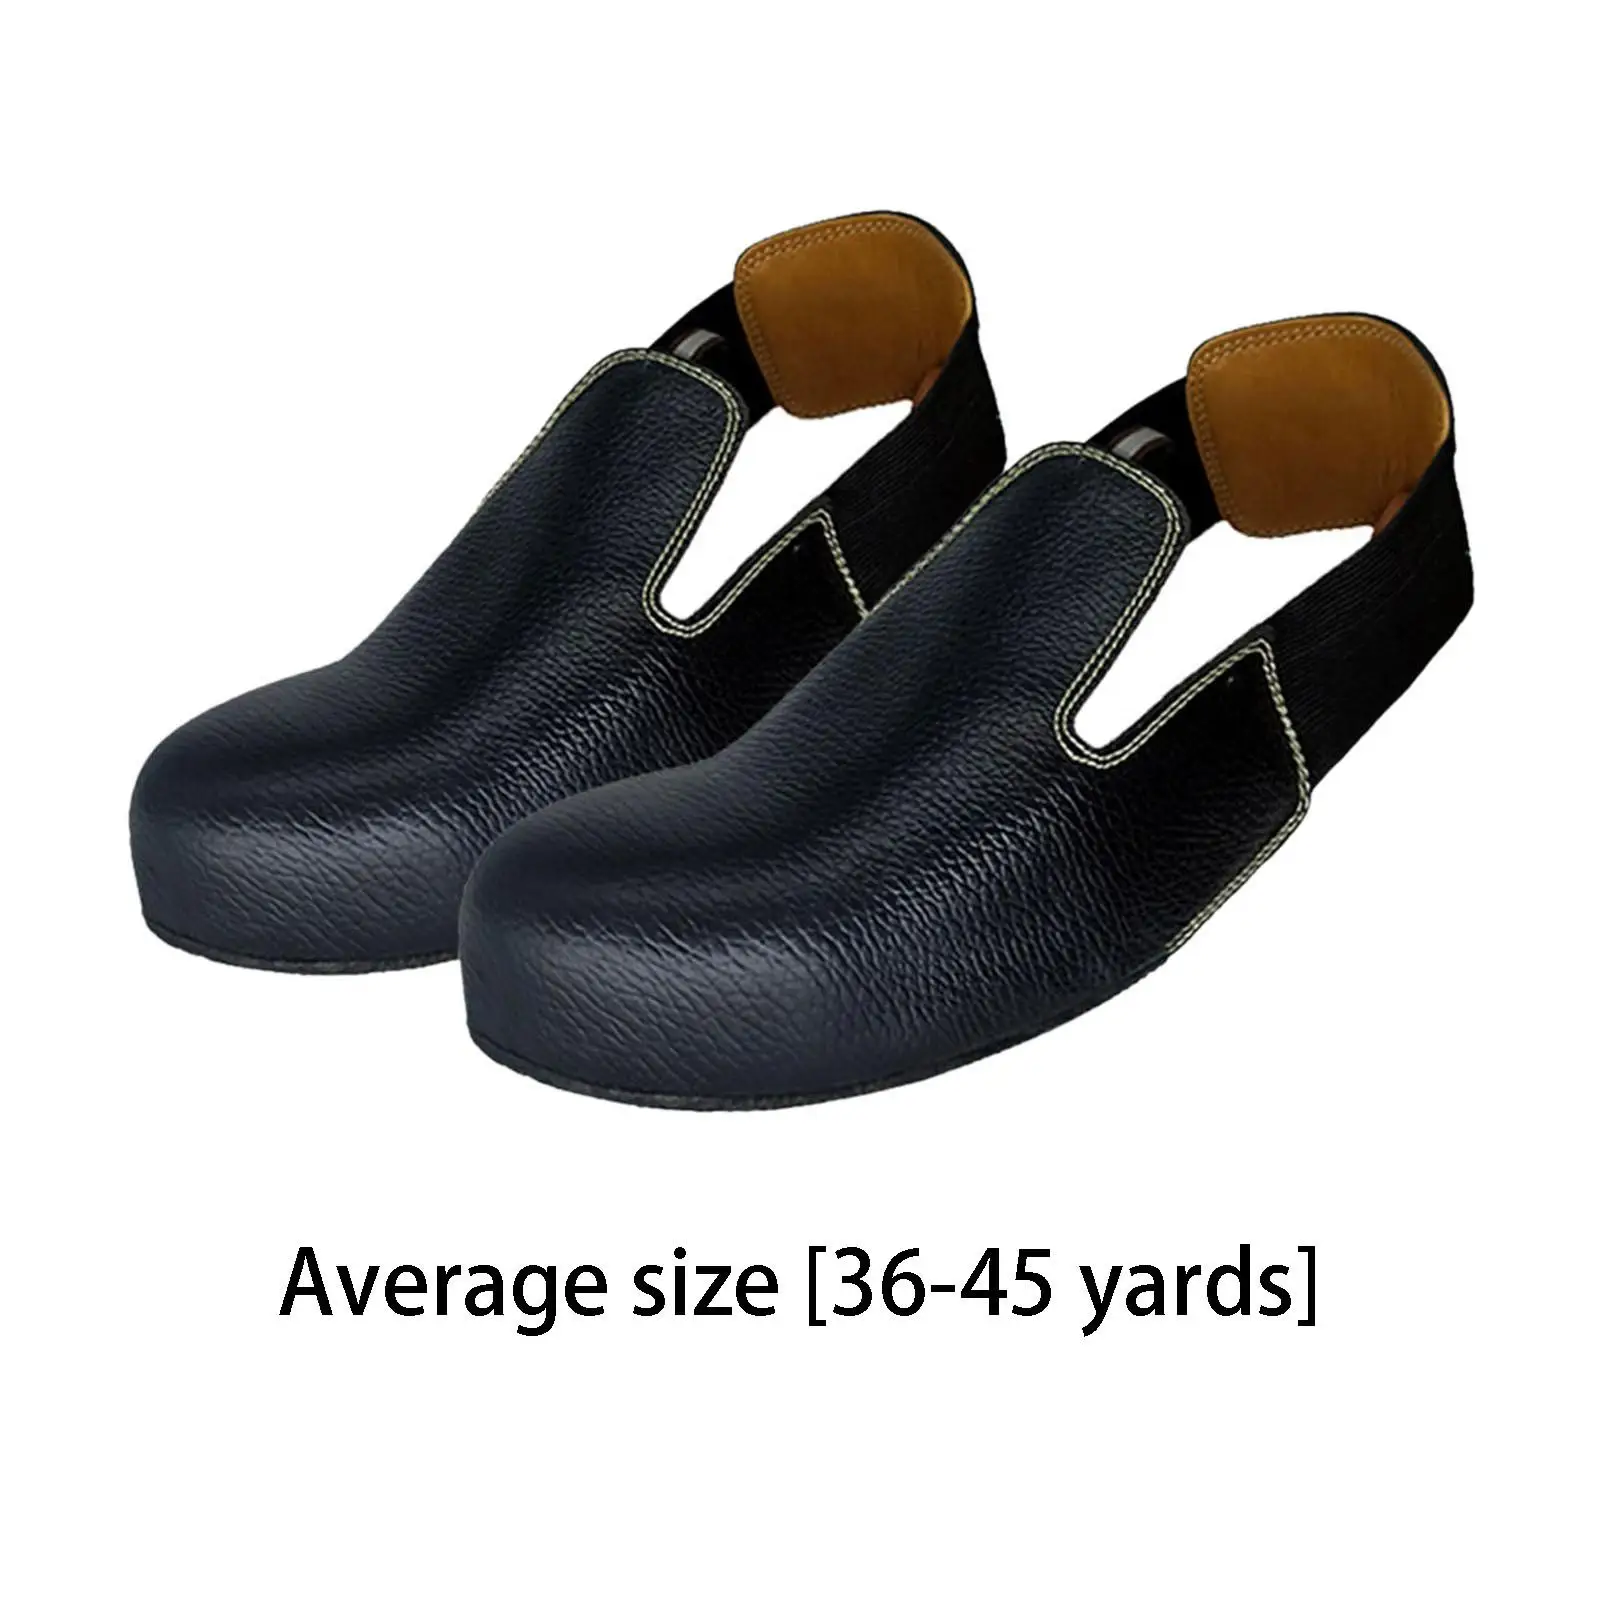 Toe Caps Safe Shoe Covers Anti Smashing Non Slip Size EUR 36-45 Anti Kick with Elastic Strap Universal for Industry Warehouse